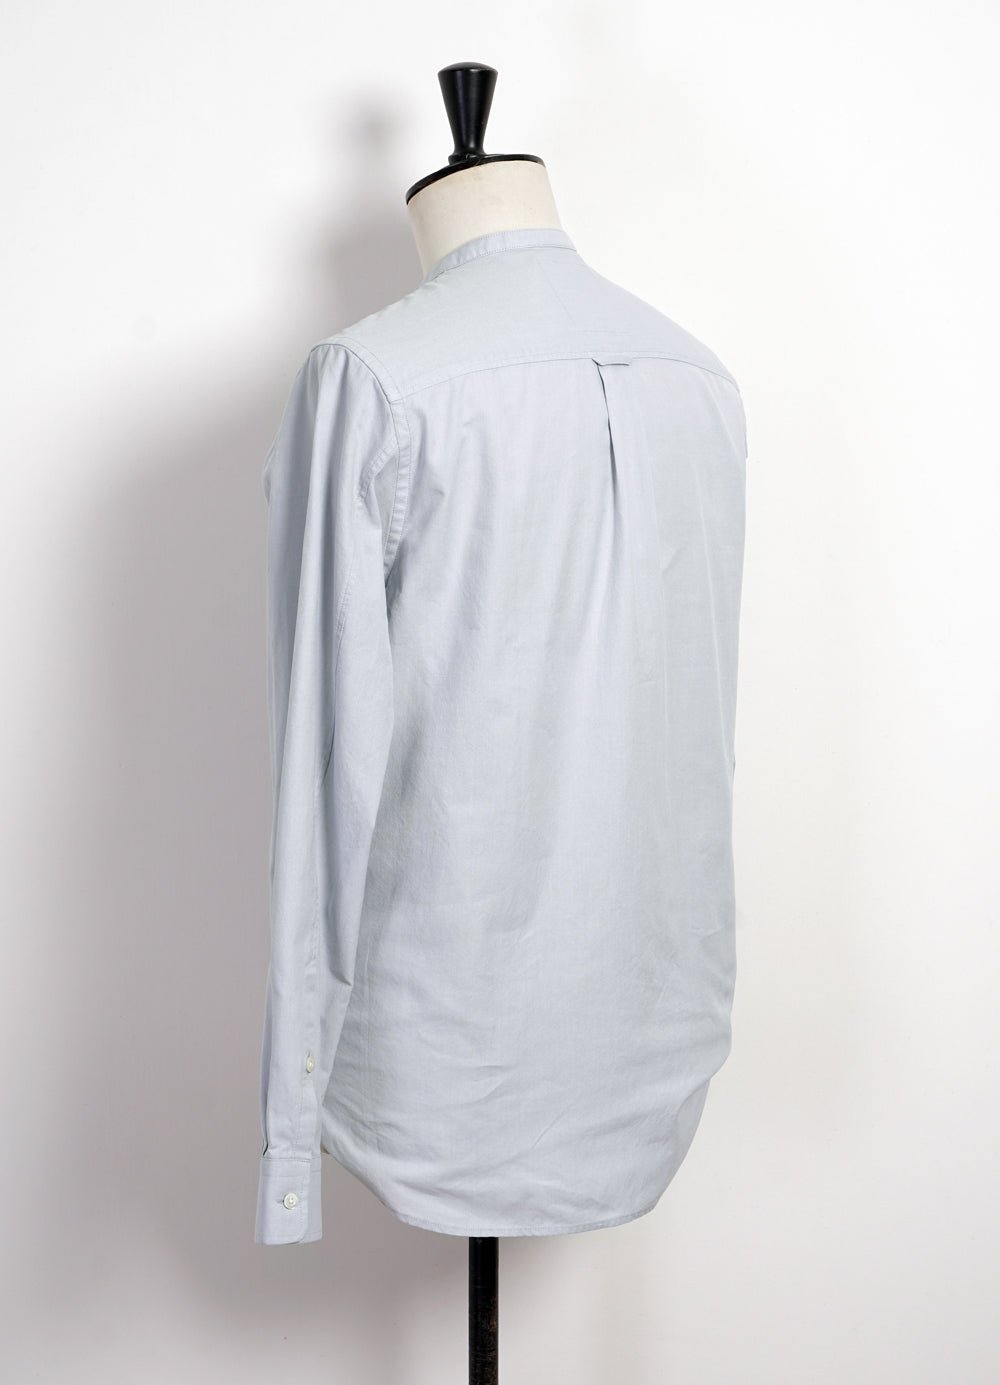 HANSEN Garments - ANTE | Collarless Shirt | Silver - HANSEN Garments